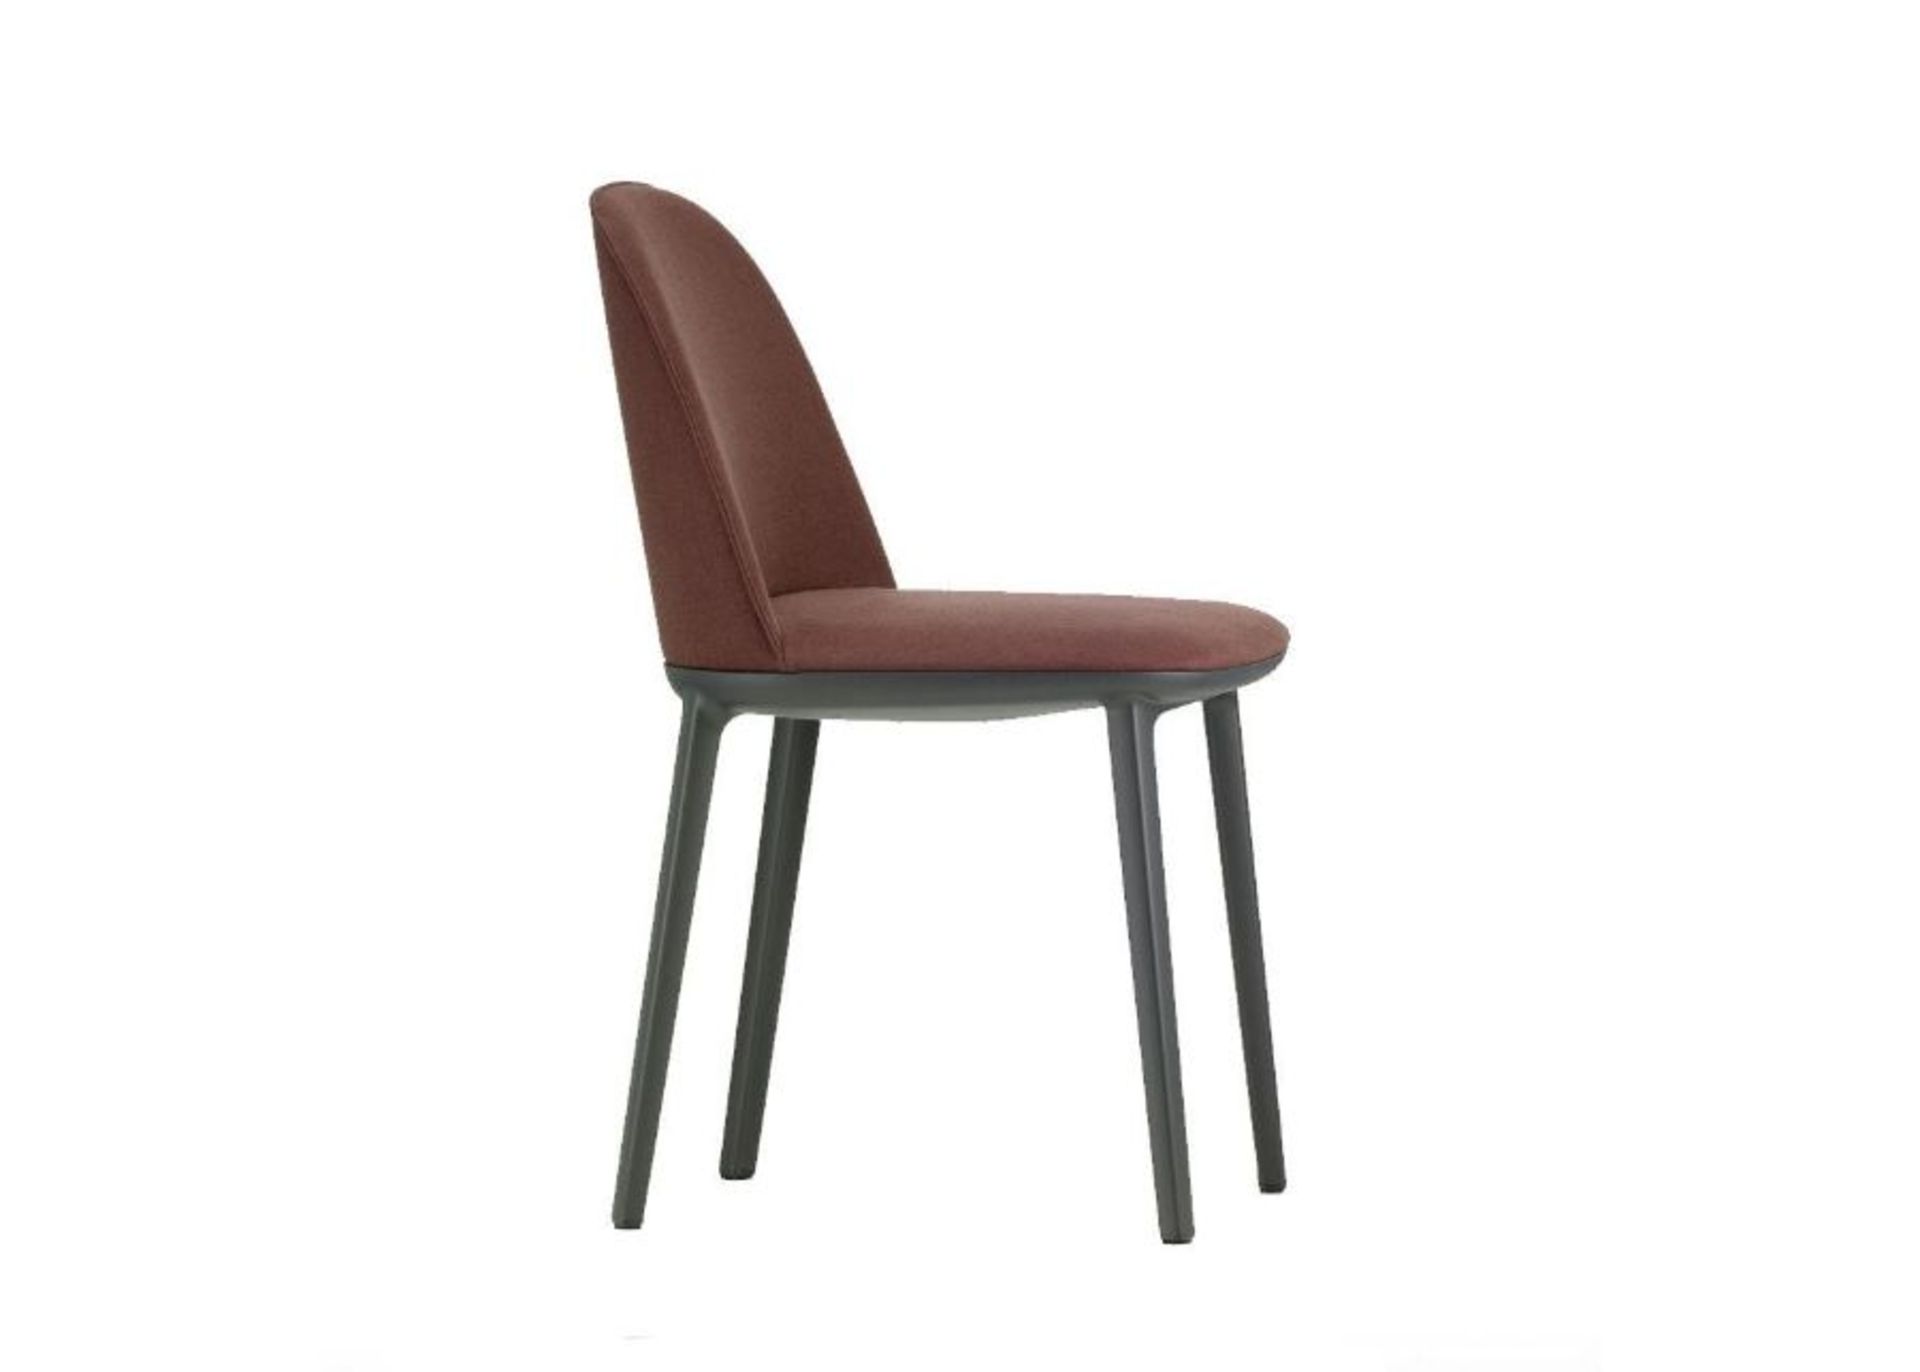 Heals Softshell Side Chair Four Legged Base Chocolate 40 F80 Tress 09 Brown Melange 42 RRP ?629.00